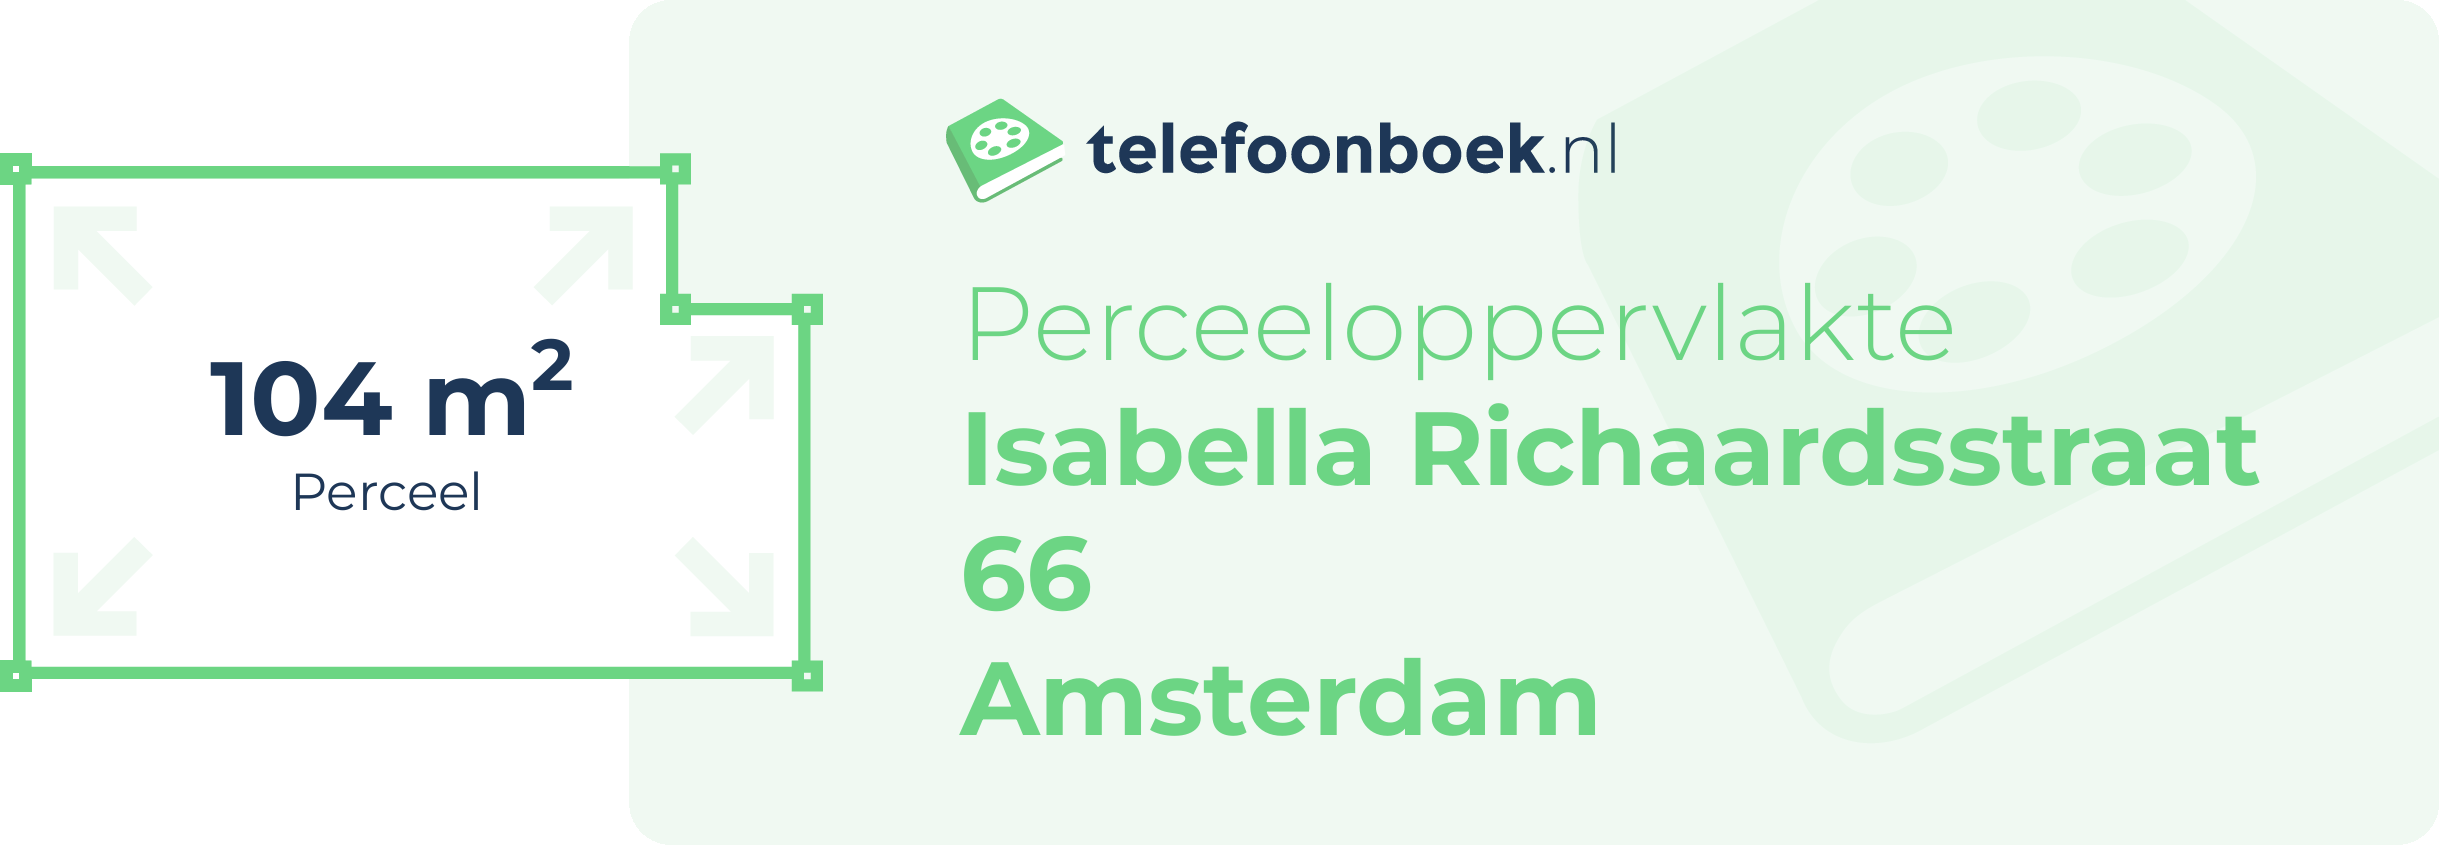 Perceeloppervlakte Isabella Richaardsstraat 66 Amsterdam